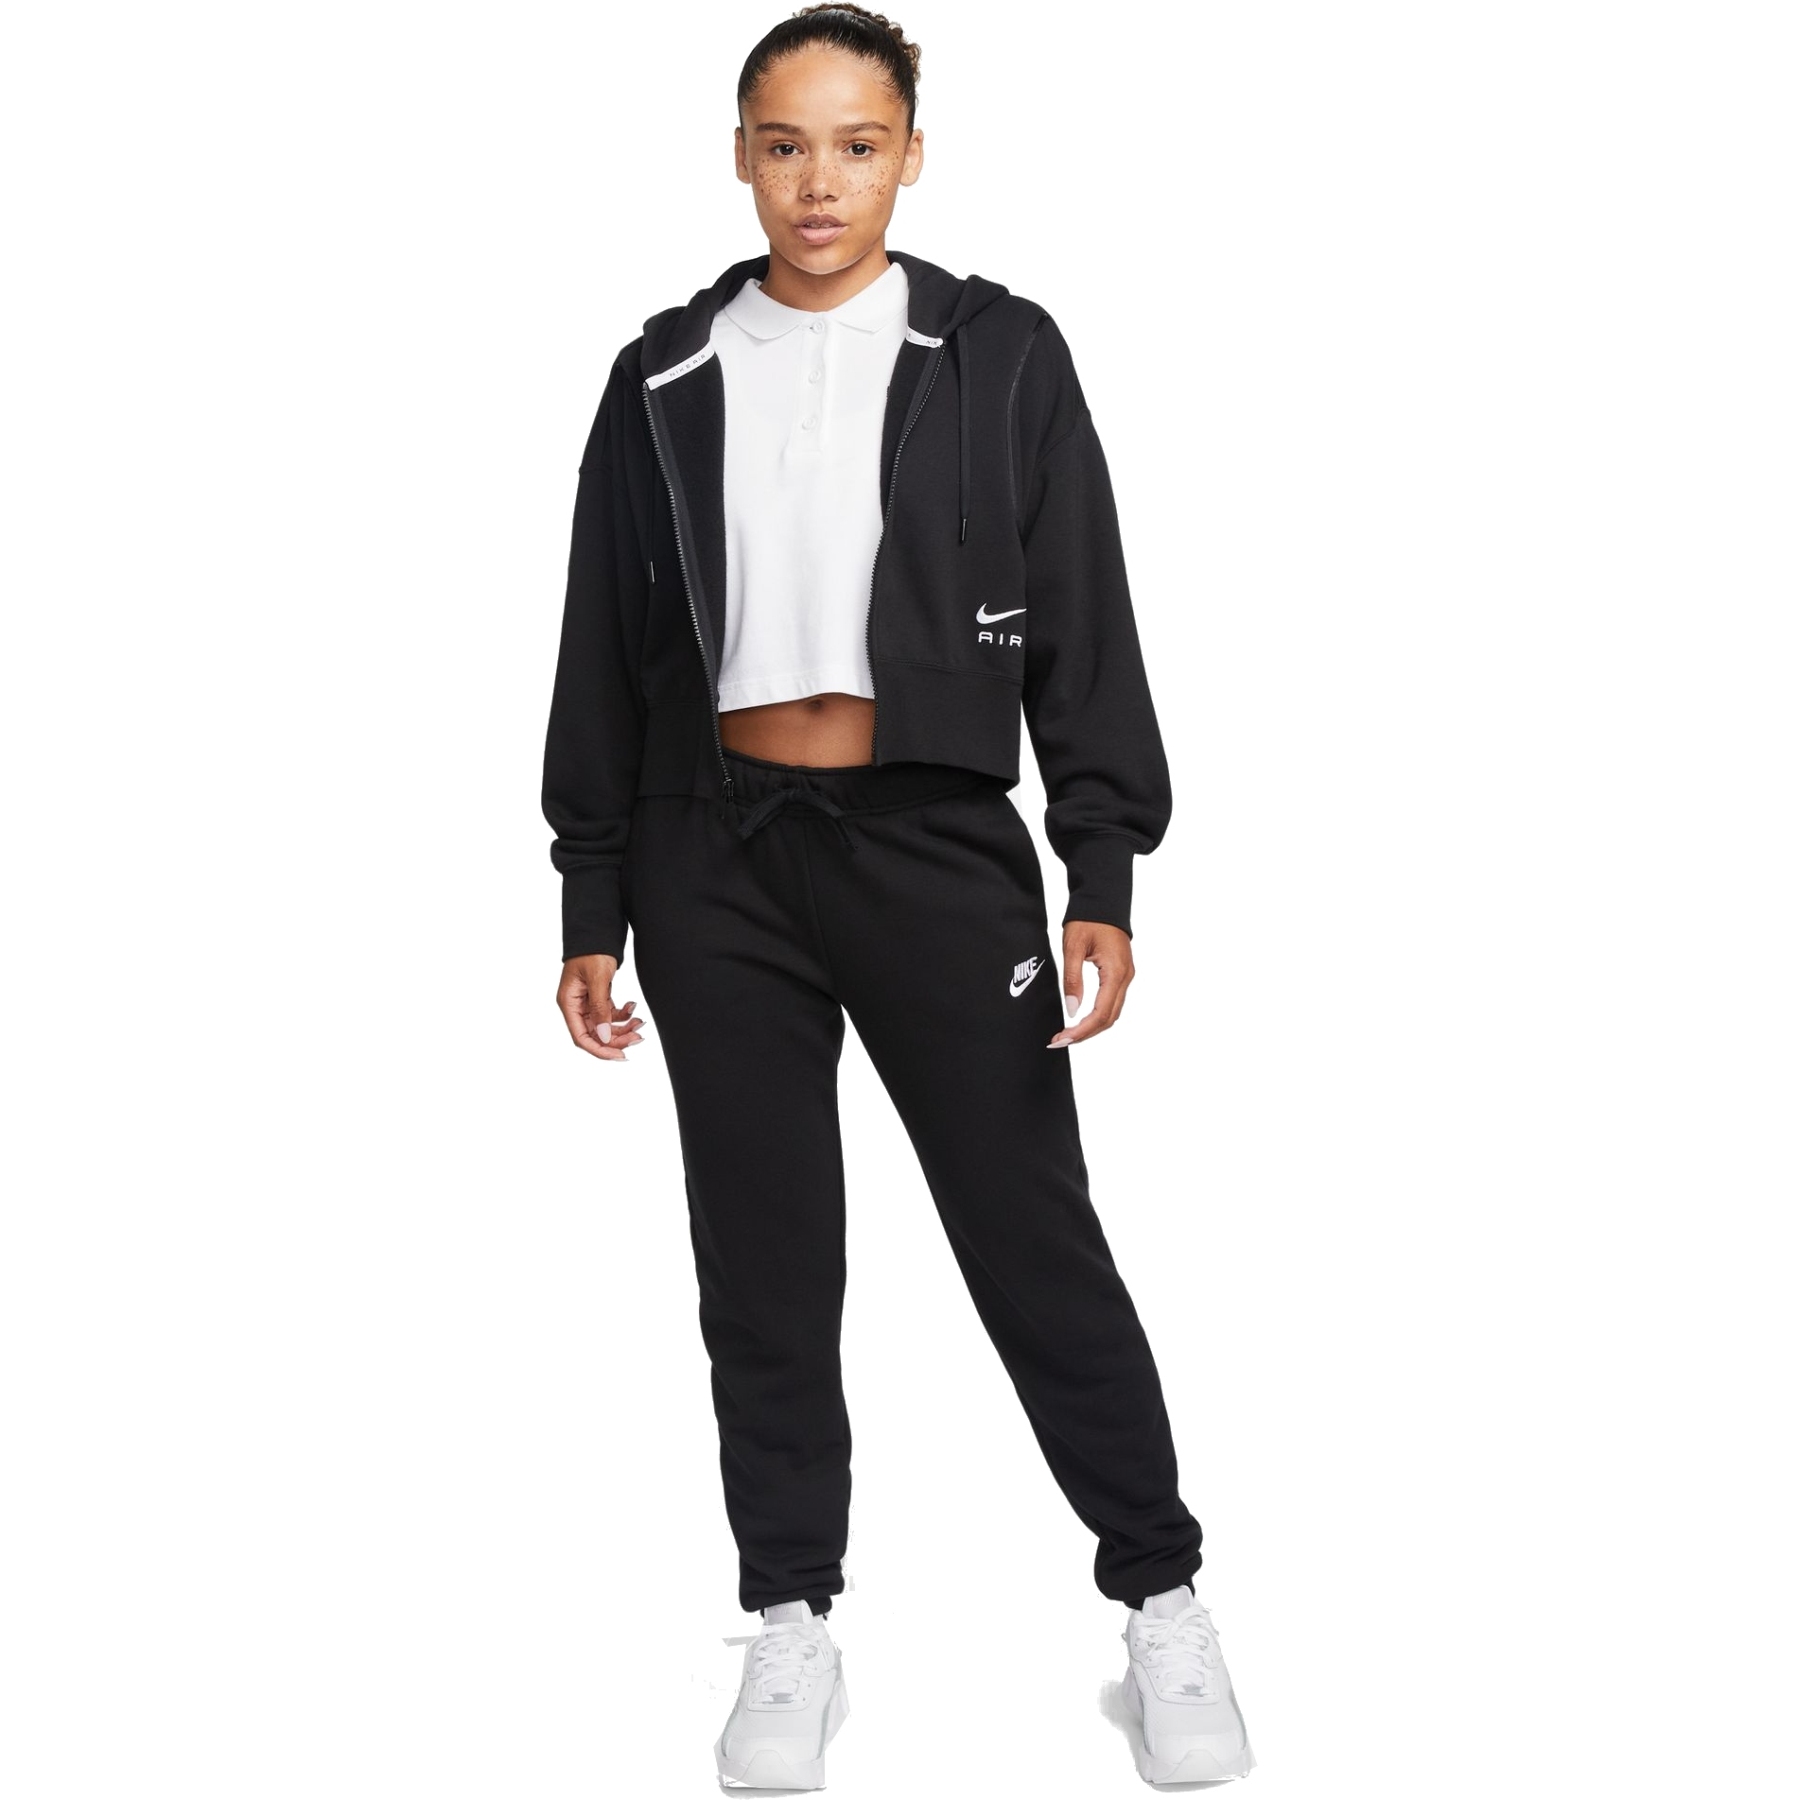 Combinaison Nike Sportswear Futura Air femme survêtements actifs